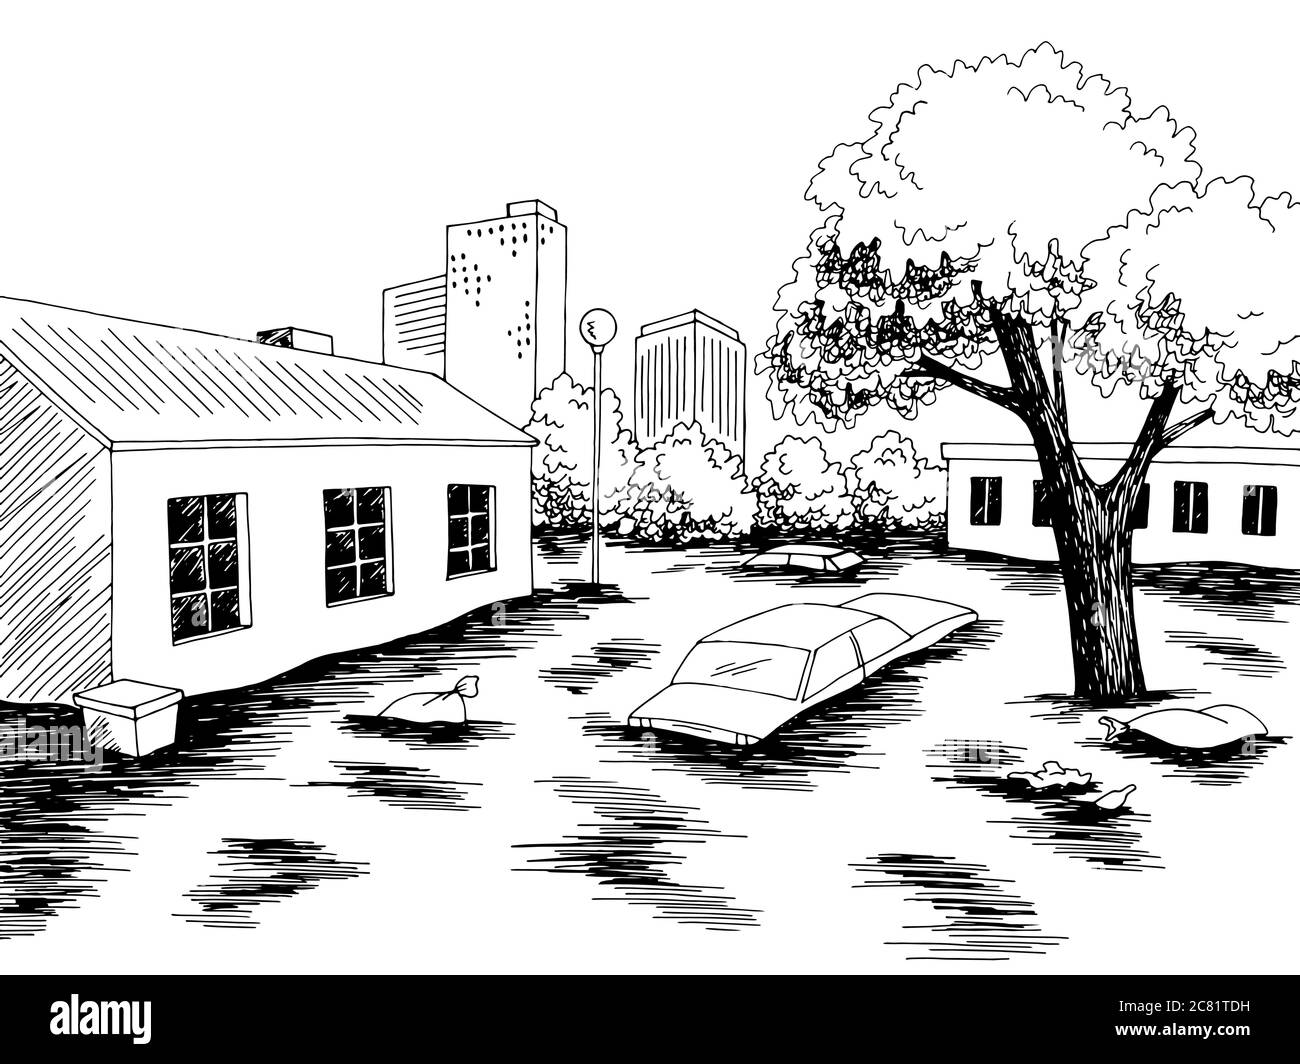 Flood graphic black white landscape city sketch illustration vector Stock Vector